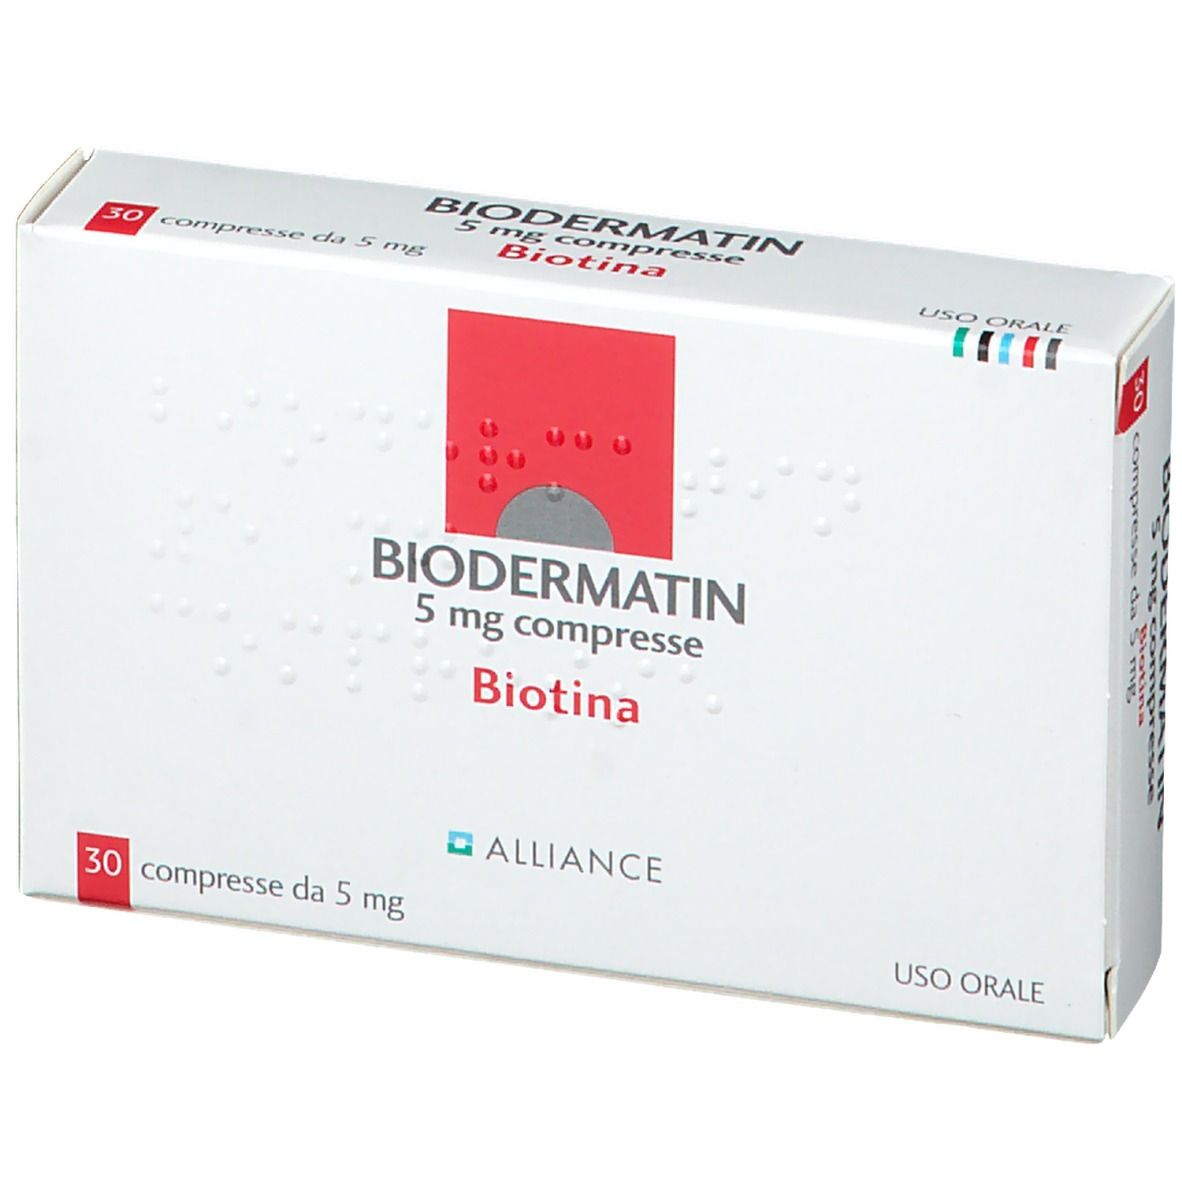 BIODERMATIN 5 mg Compresse